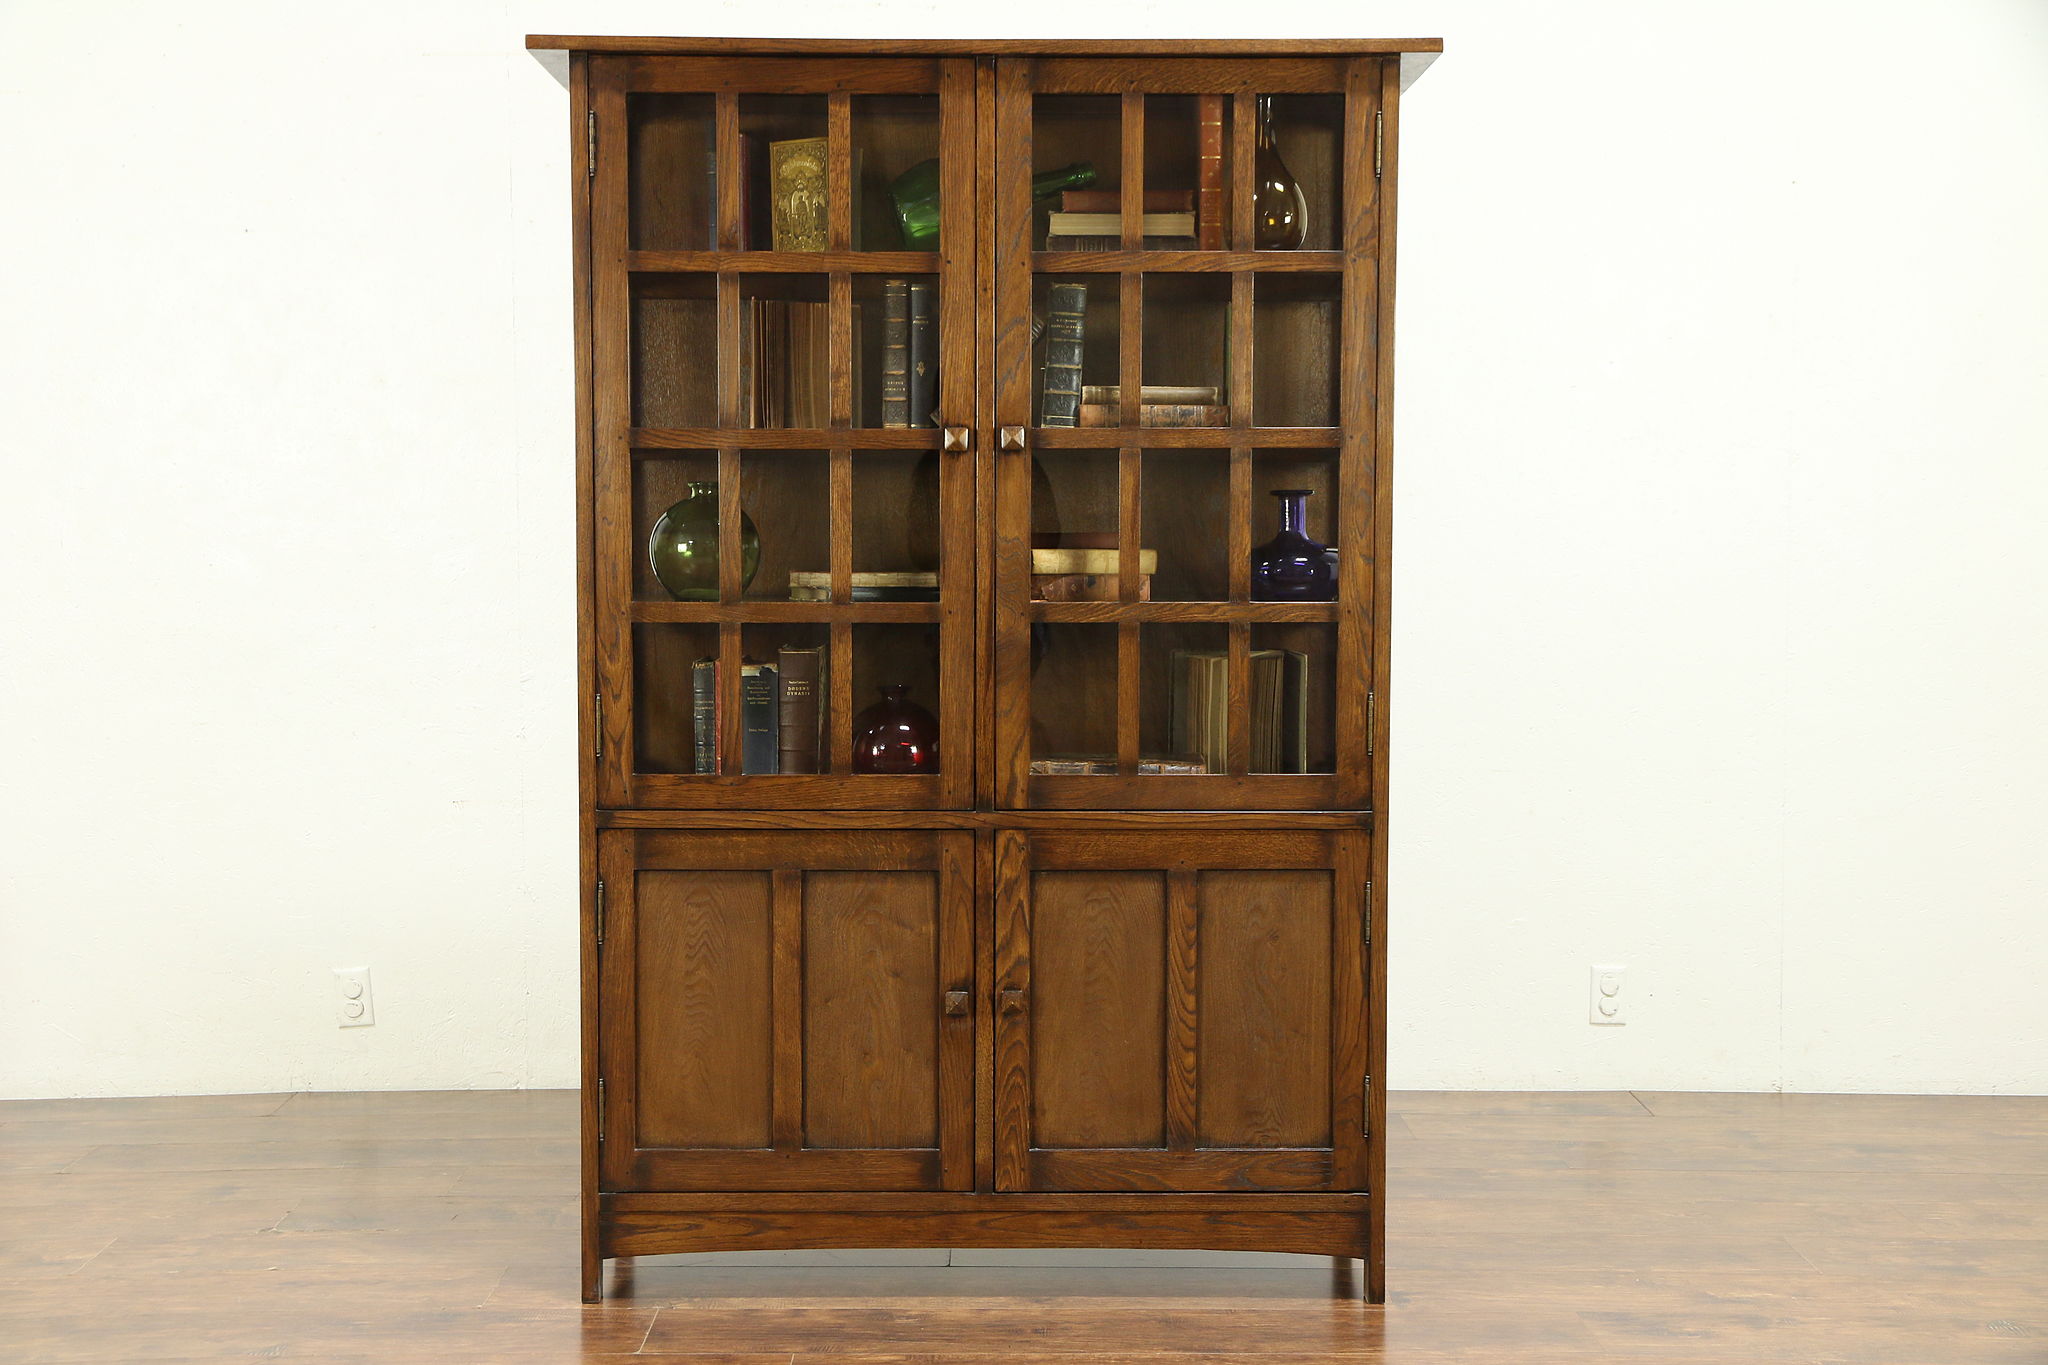 Sold Craftsman Style Oak Bookcase Or Kitchen Pantry Cabinet